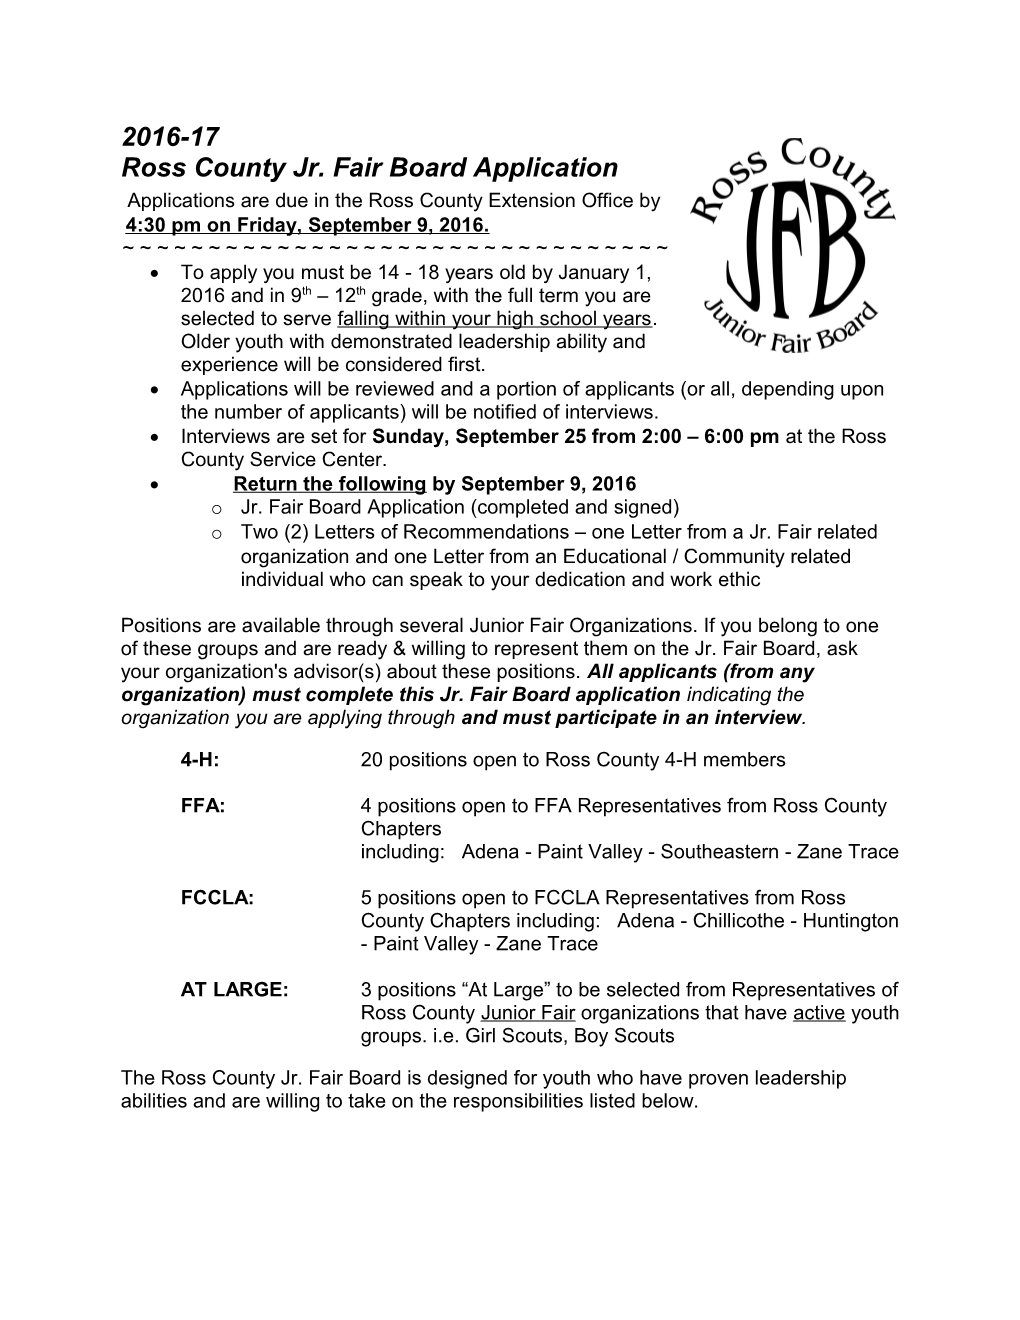 Ross County Jr. Fair Board Application